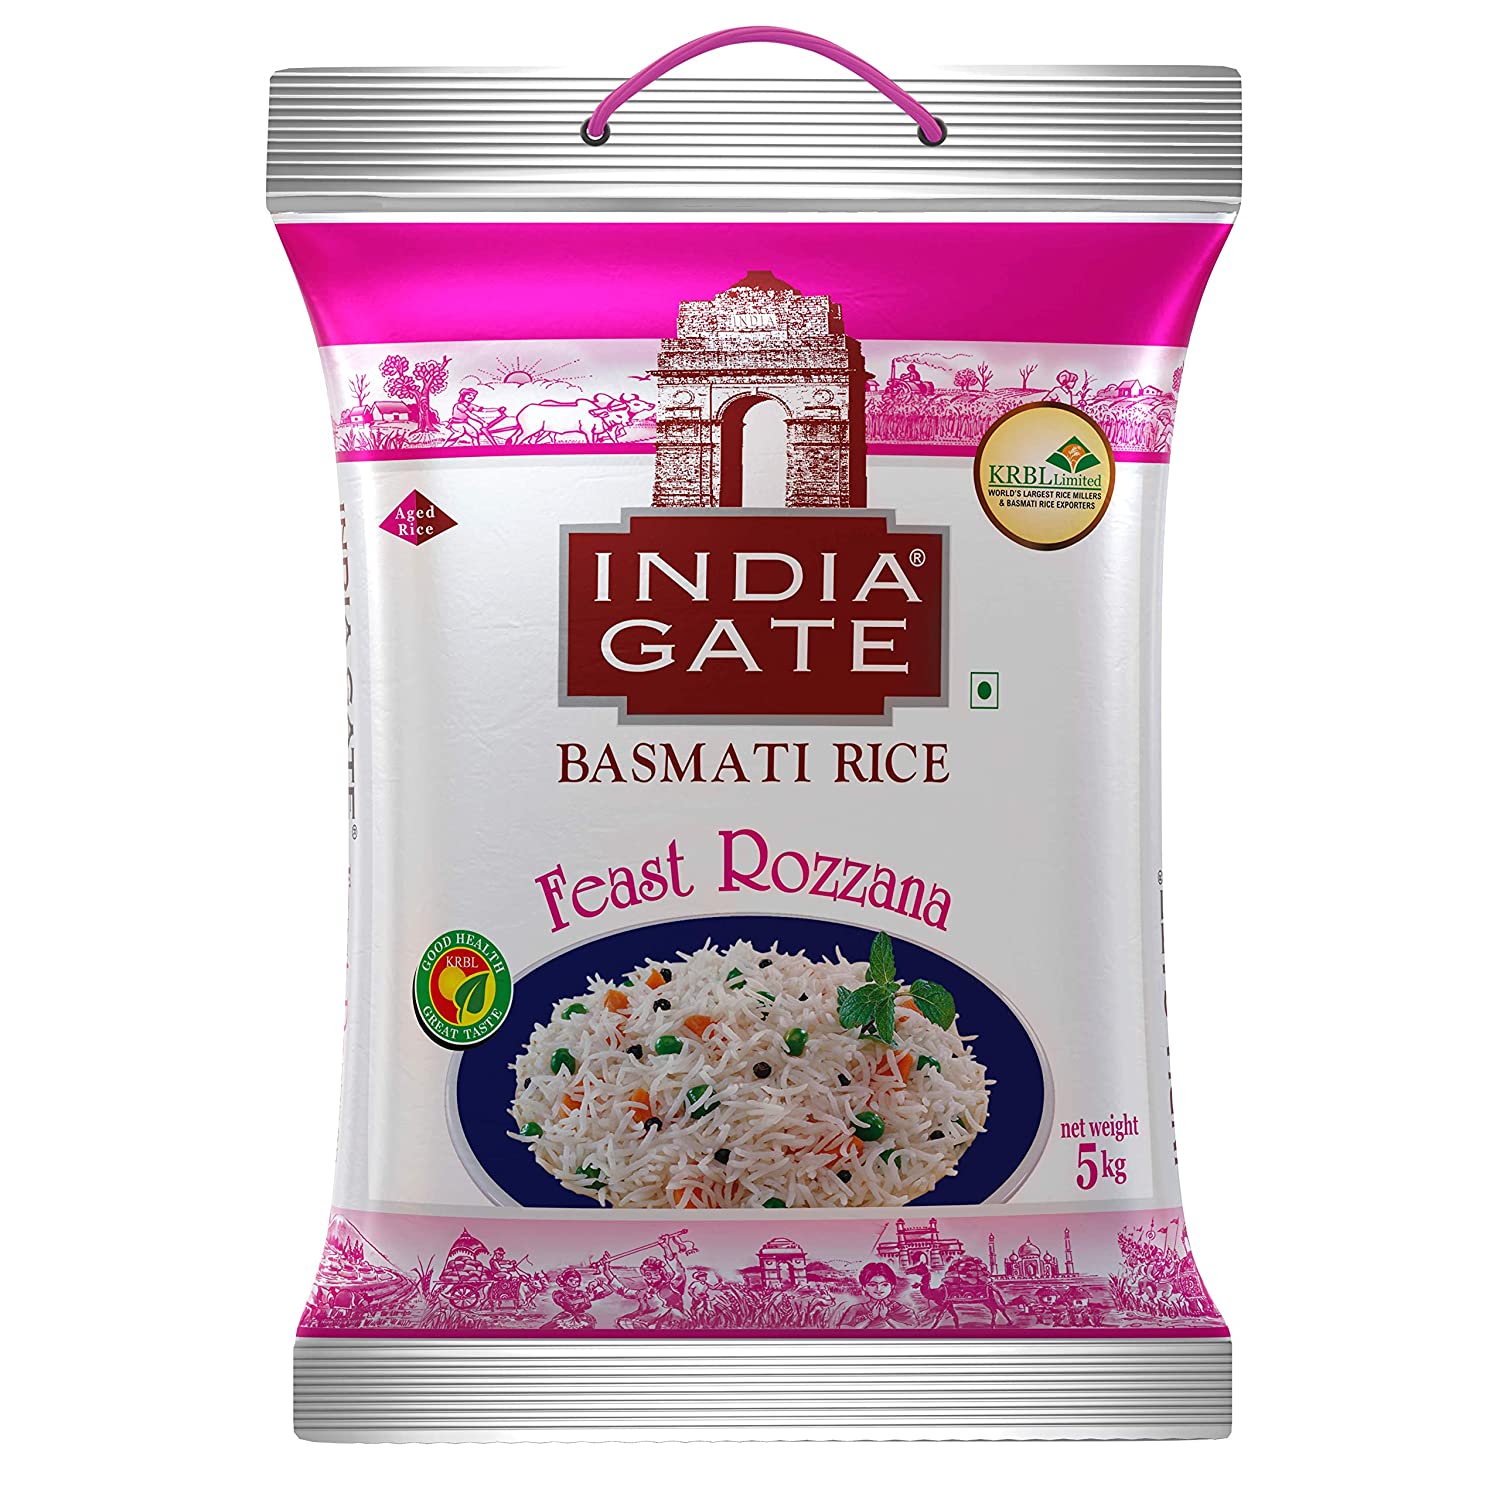 India Gate 5kg Rozzana Rice